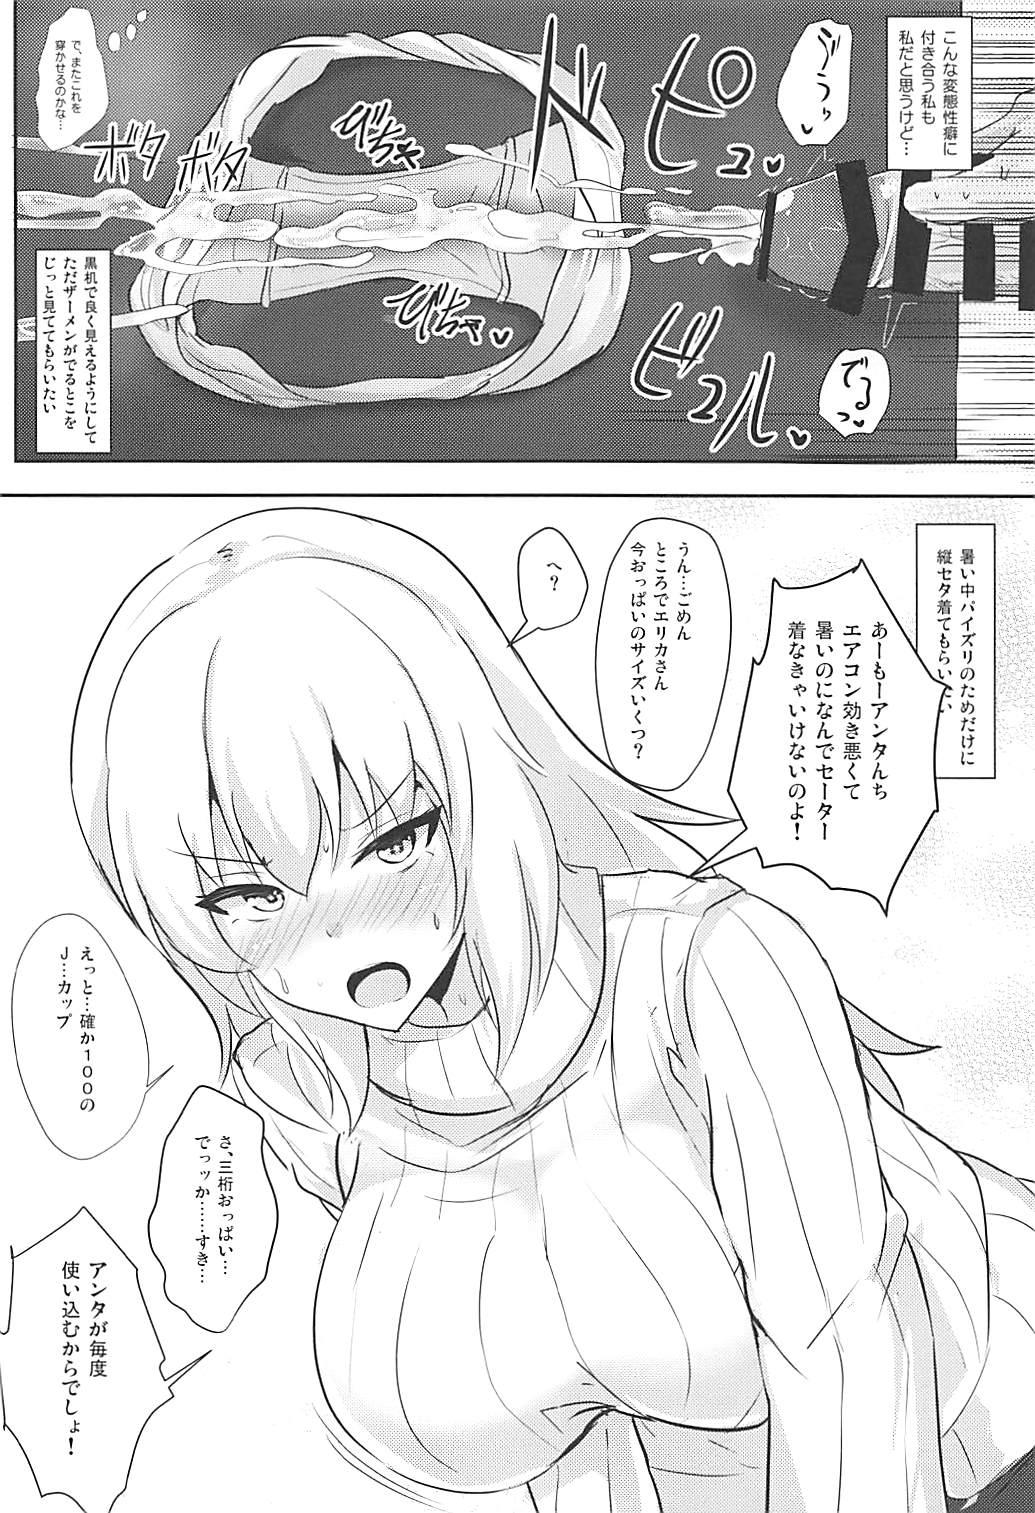 Humiliation Pov Onayami Itsumi-san 2 - Girls und panzer Tribbing - Page 4